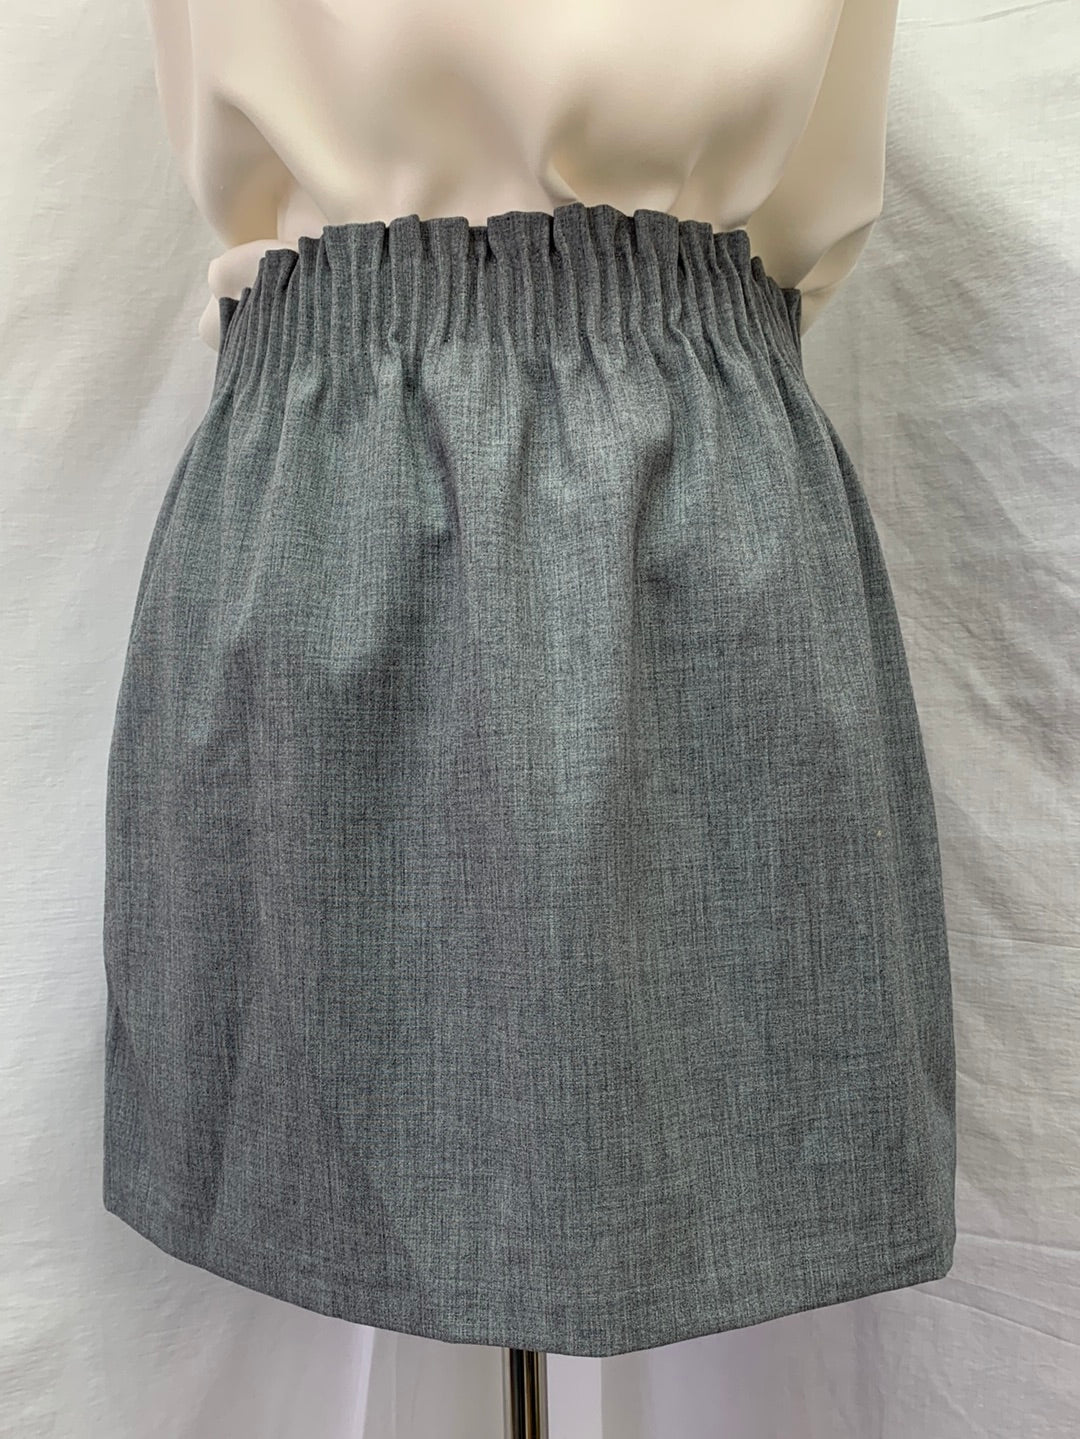 NWT - J. CREW MERCANTILE gray Side Pockets Pull On Skirt - 4